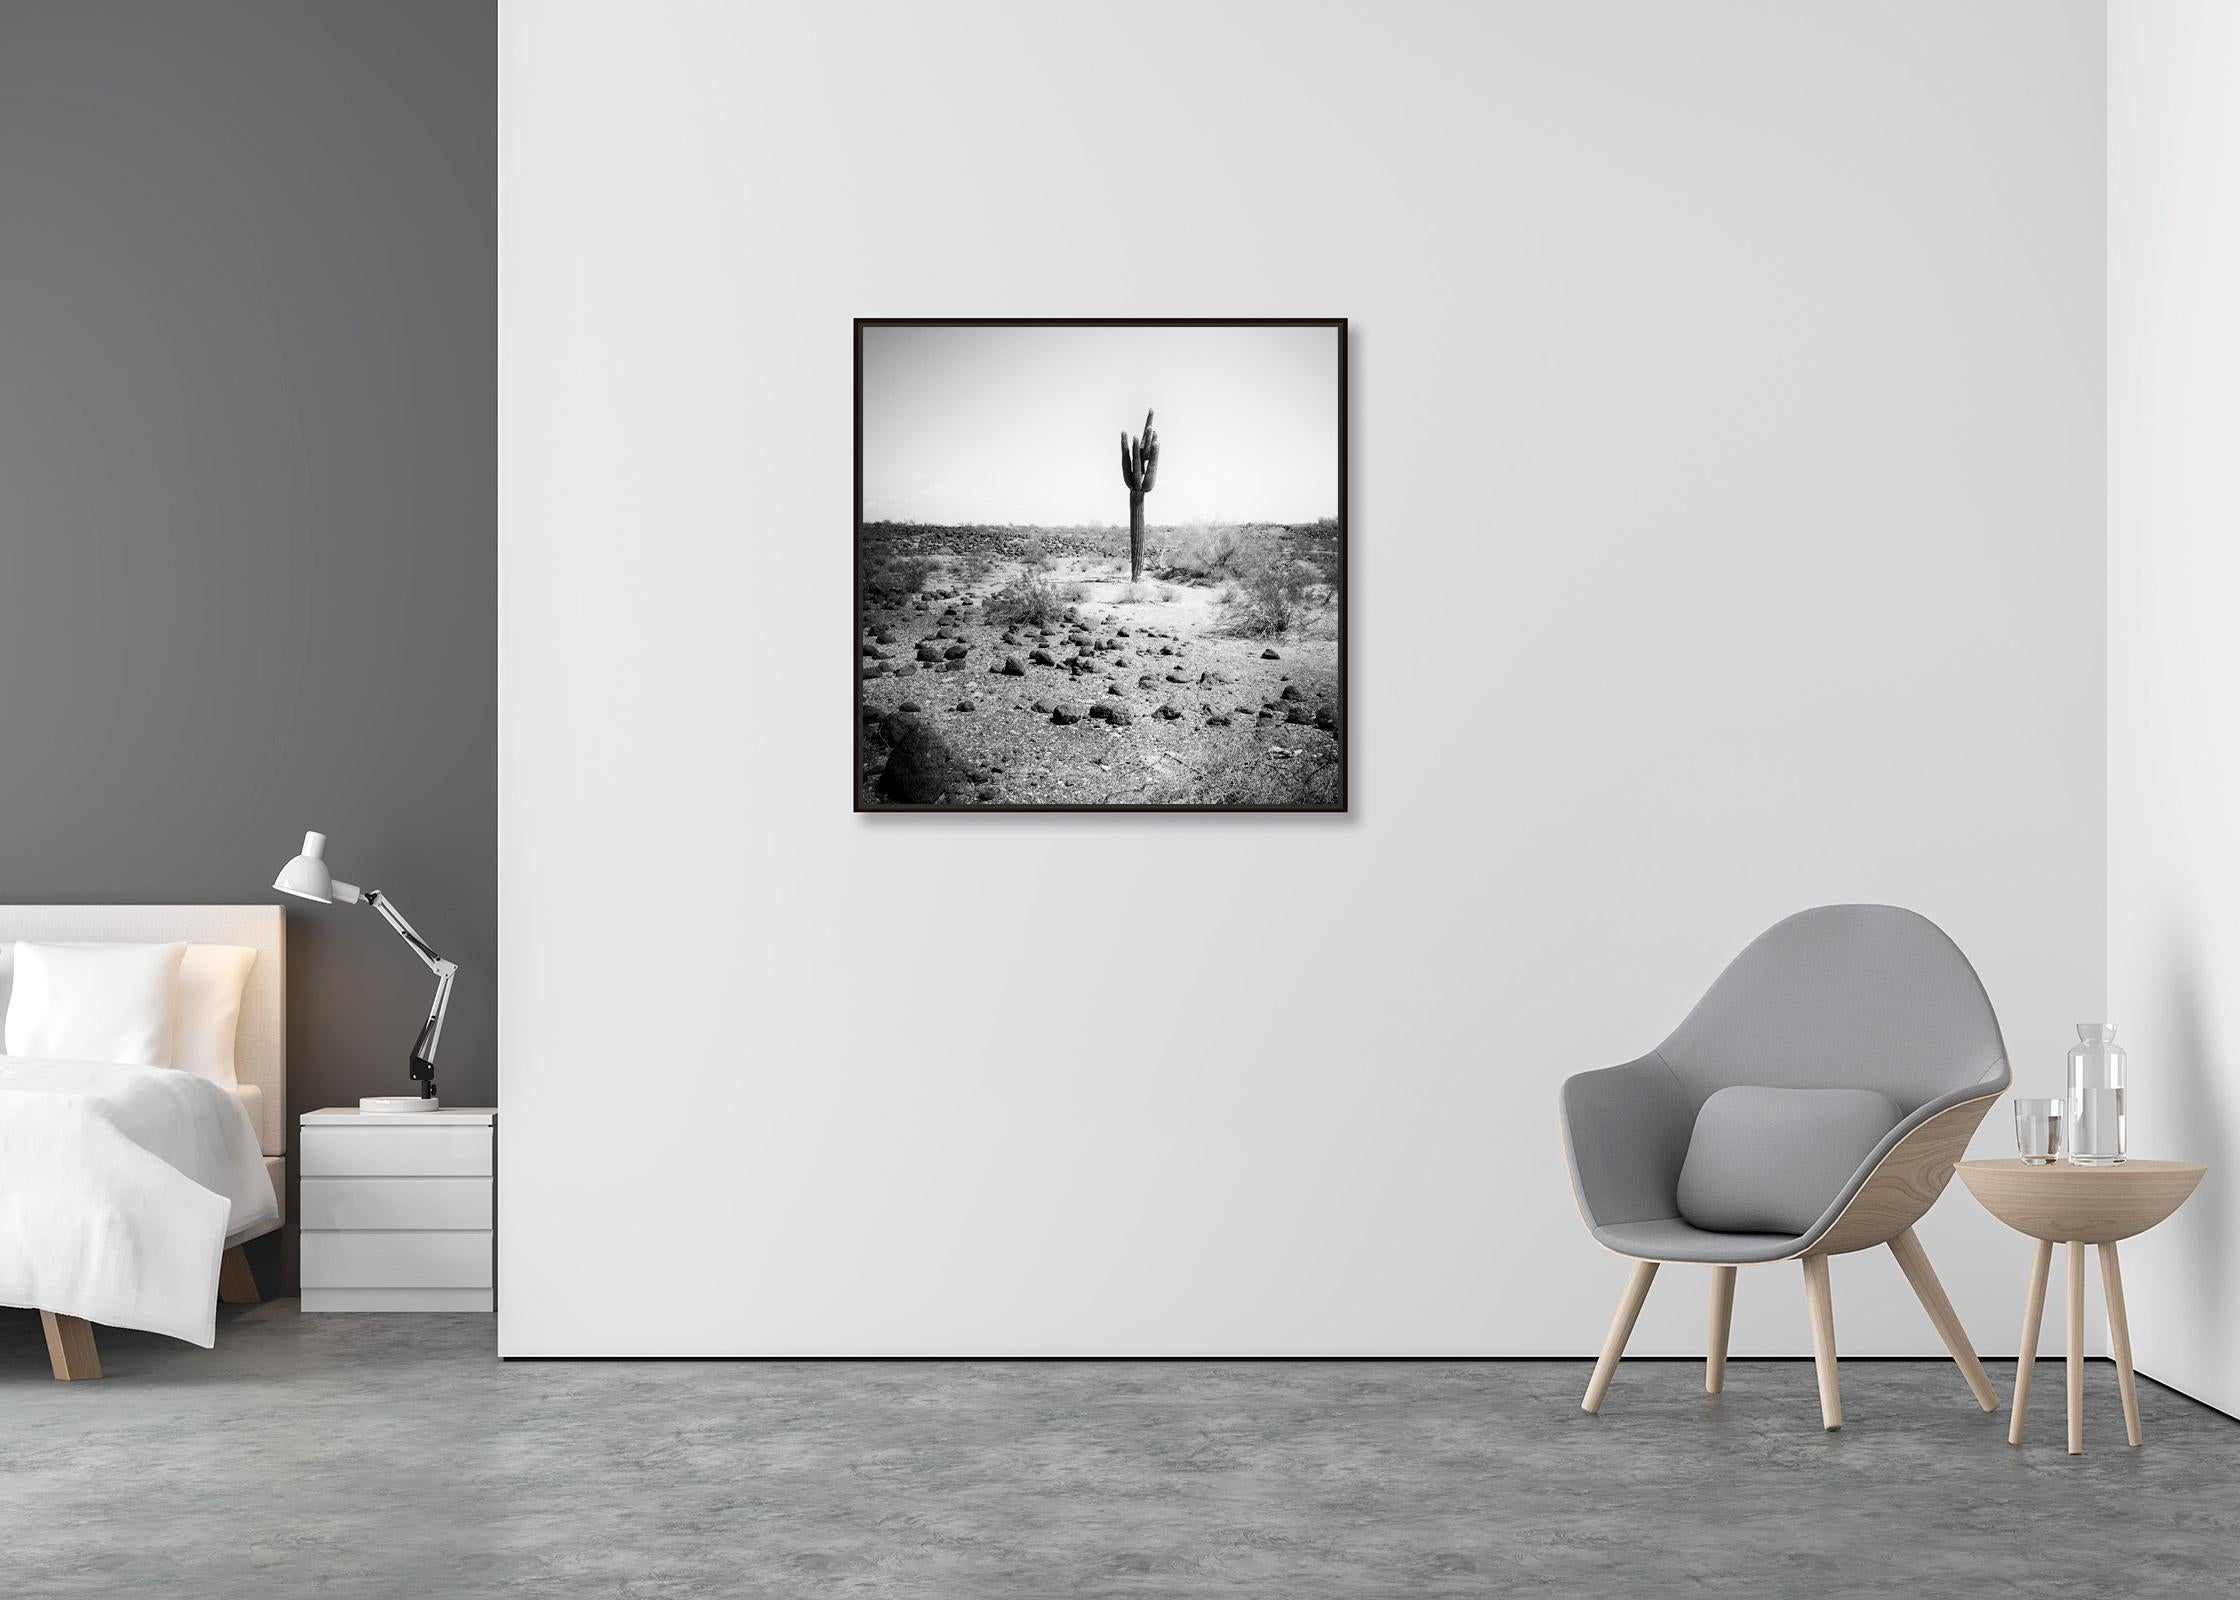 The last One Cactus Desert Arizona USA black & white landscape art photography - Contemporary Photograph by Gerald Berghammer